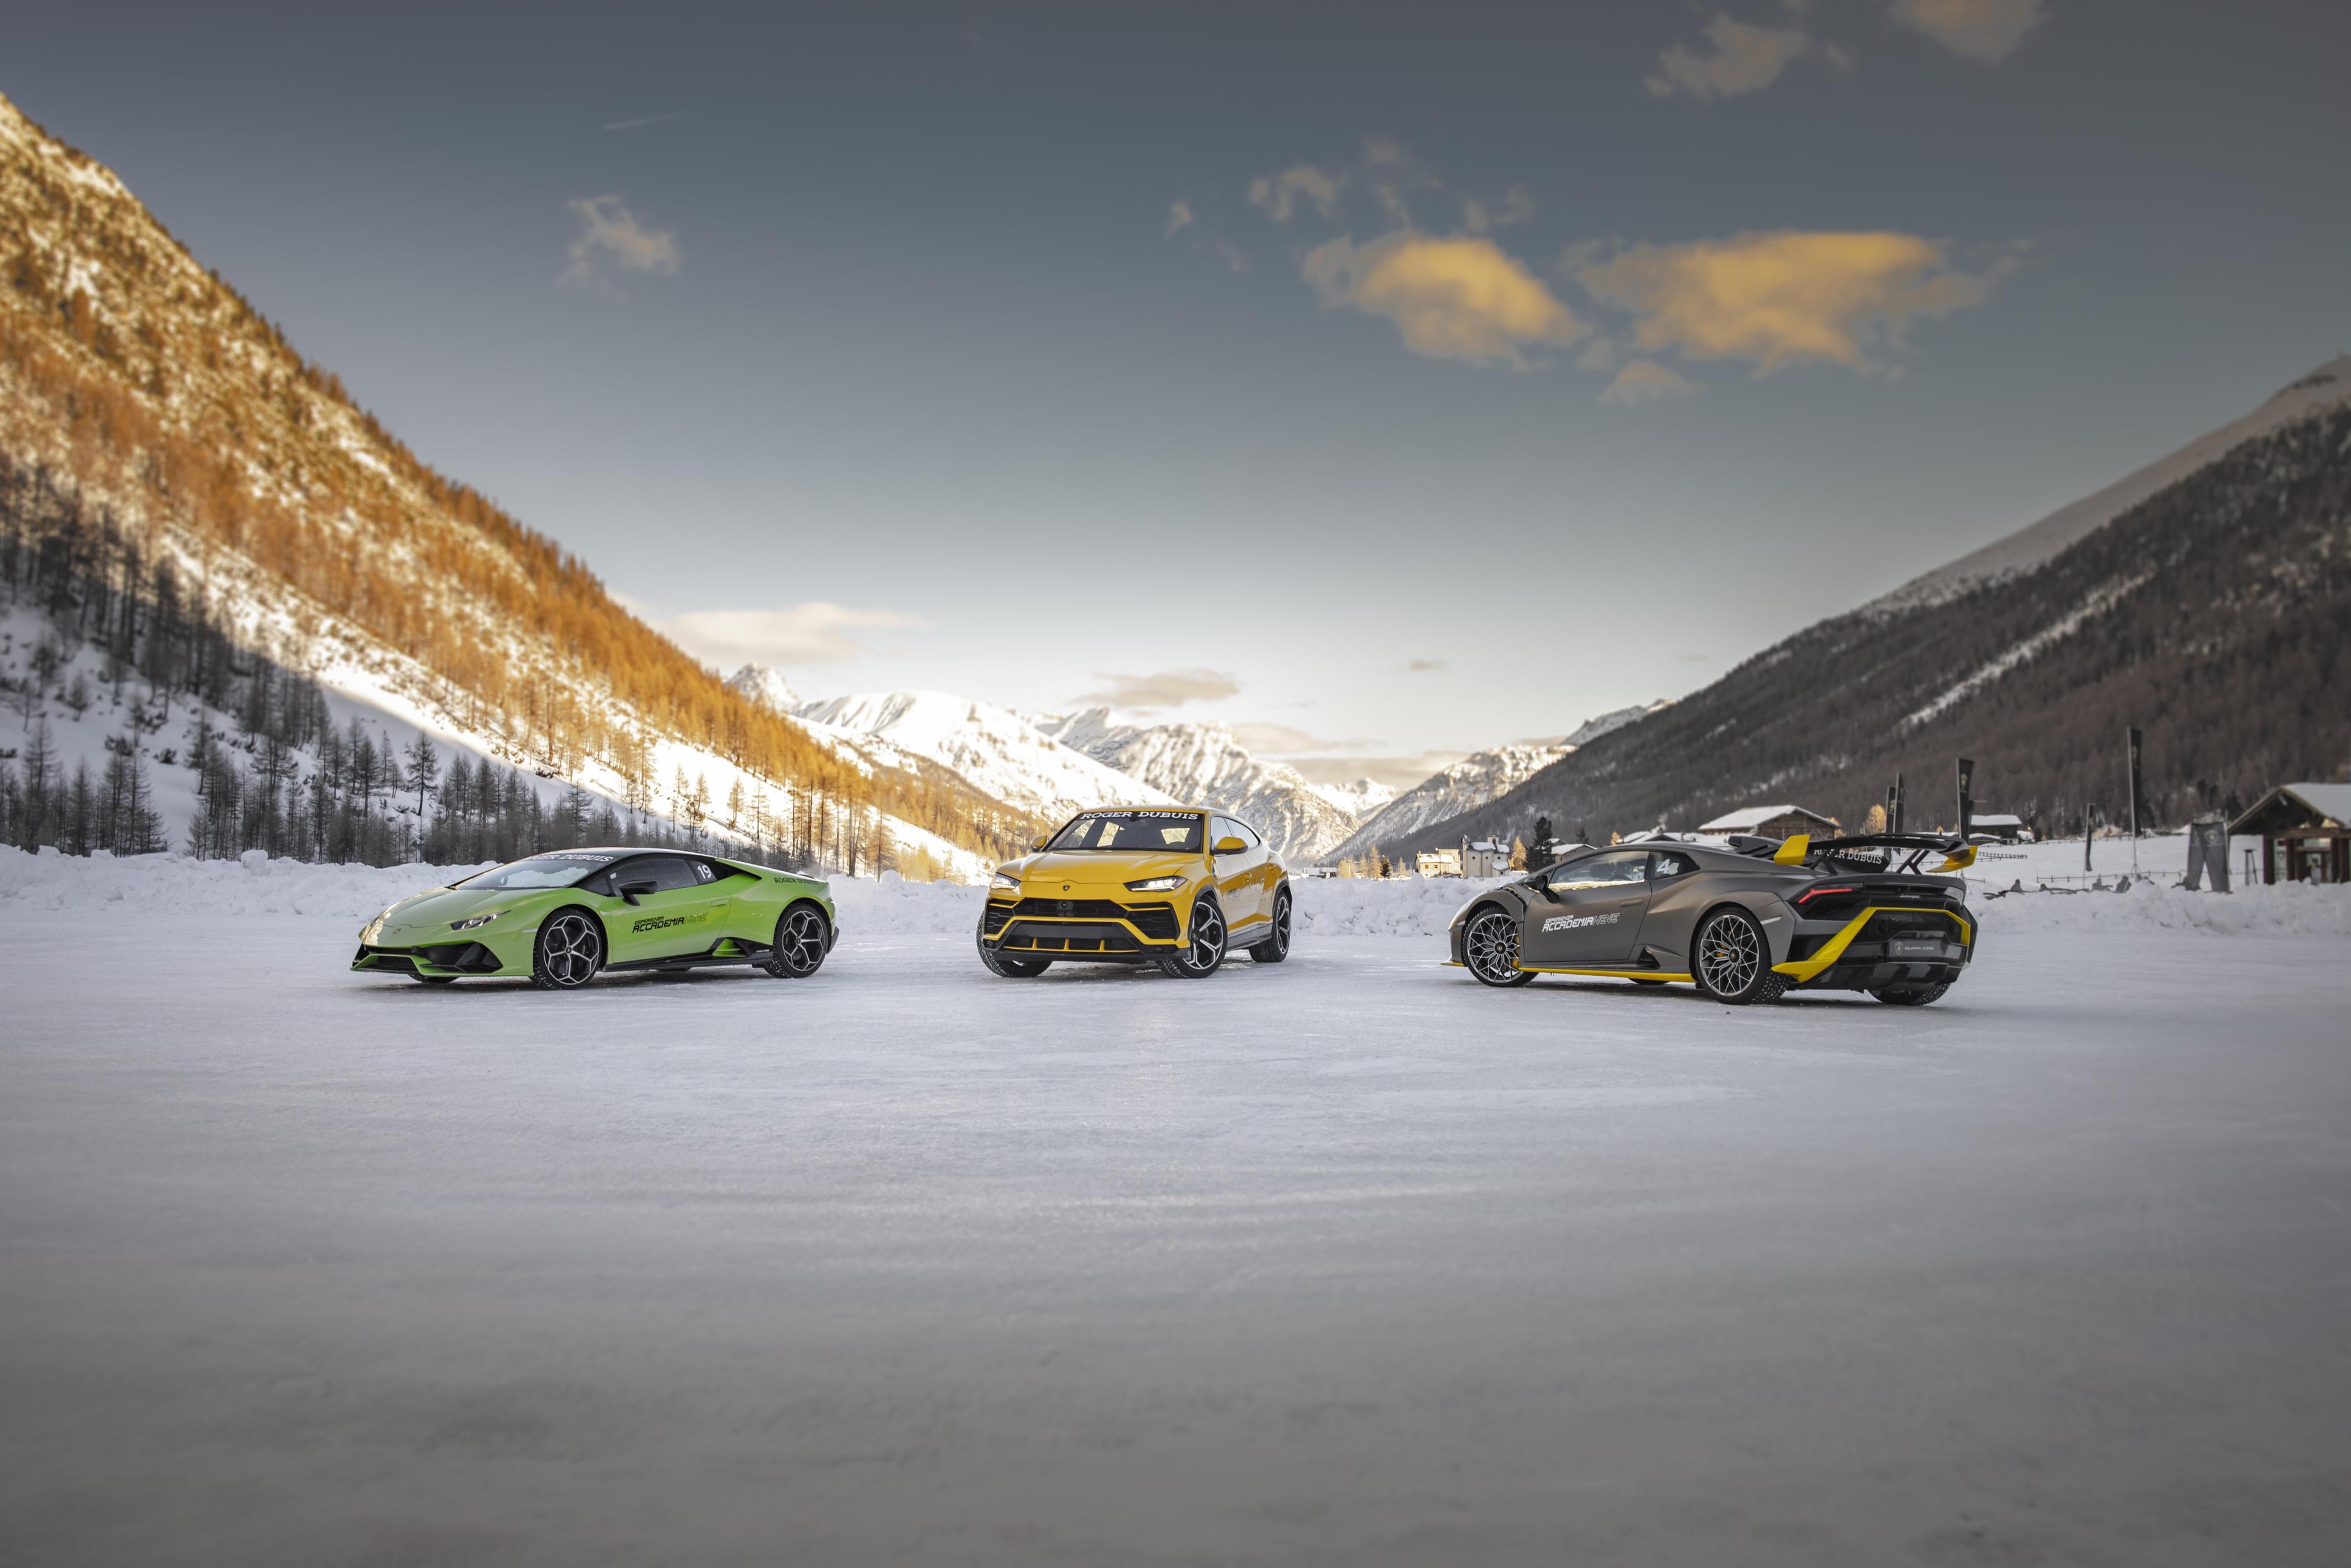 A lineup of various Lamborghini cars against a snowy mountainous backdrop.